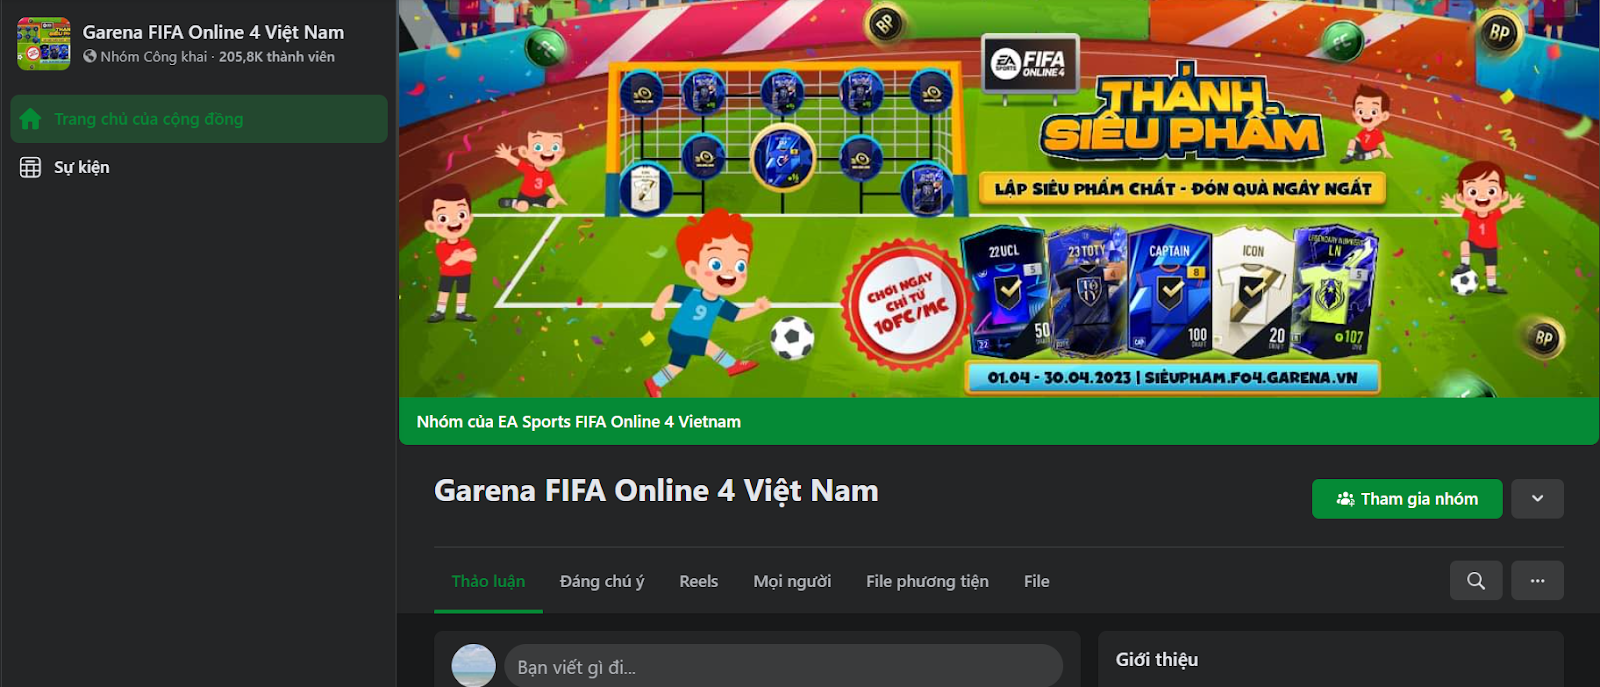 Nhóm facebook của FIFA ONLINE 4 Việt Nam 